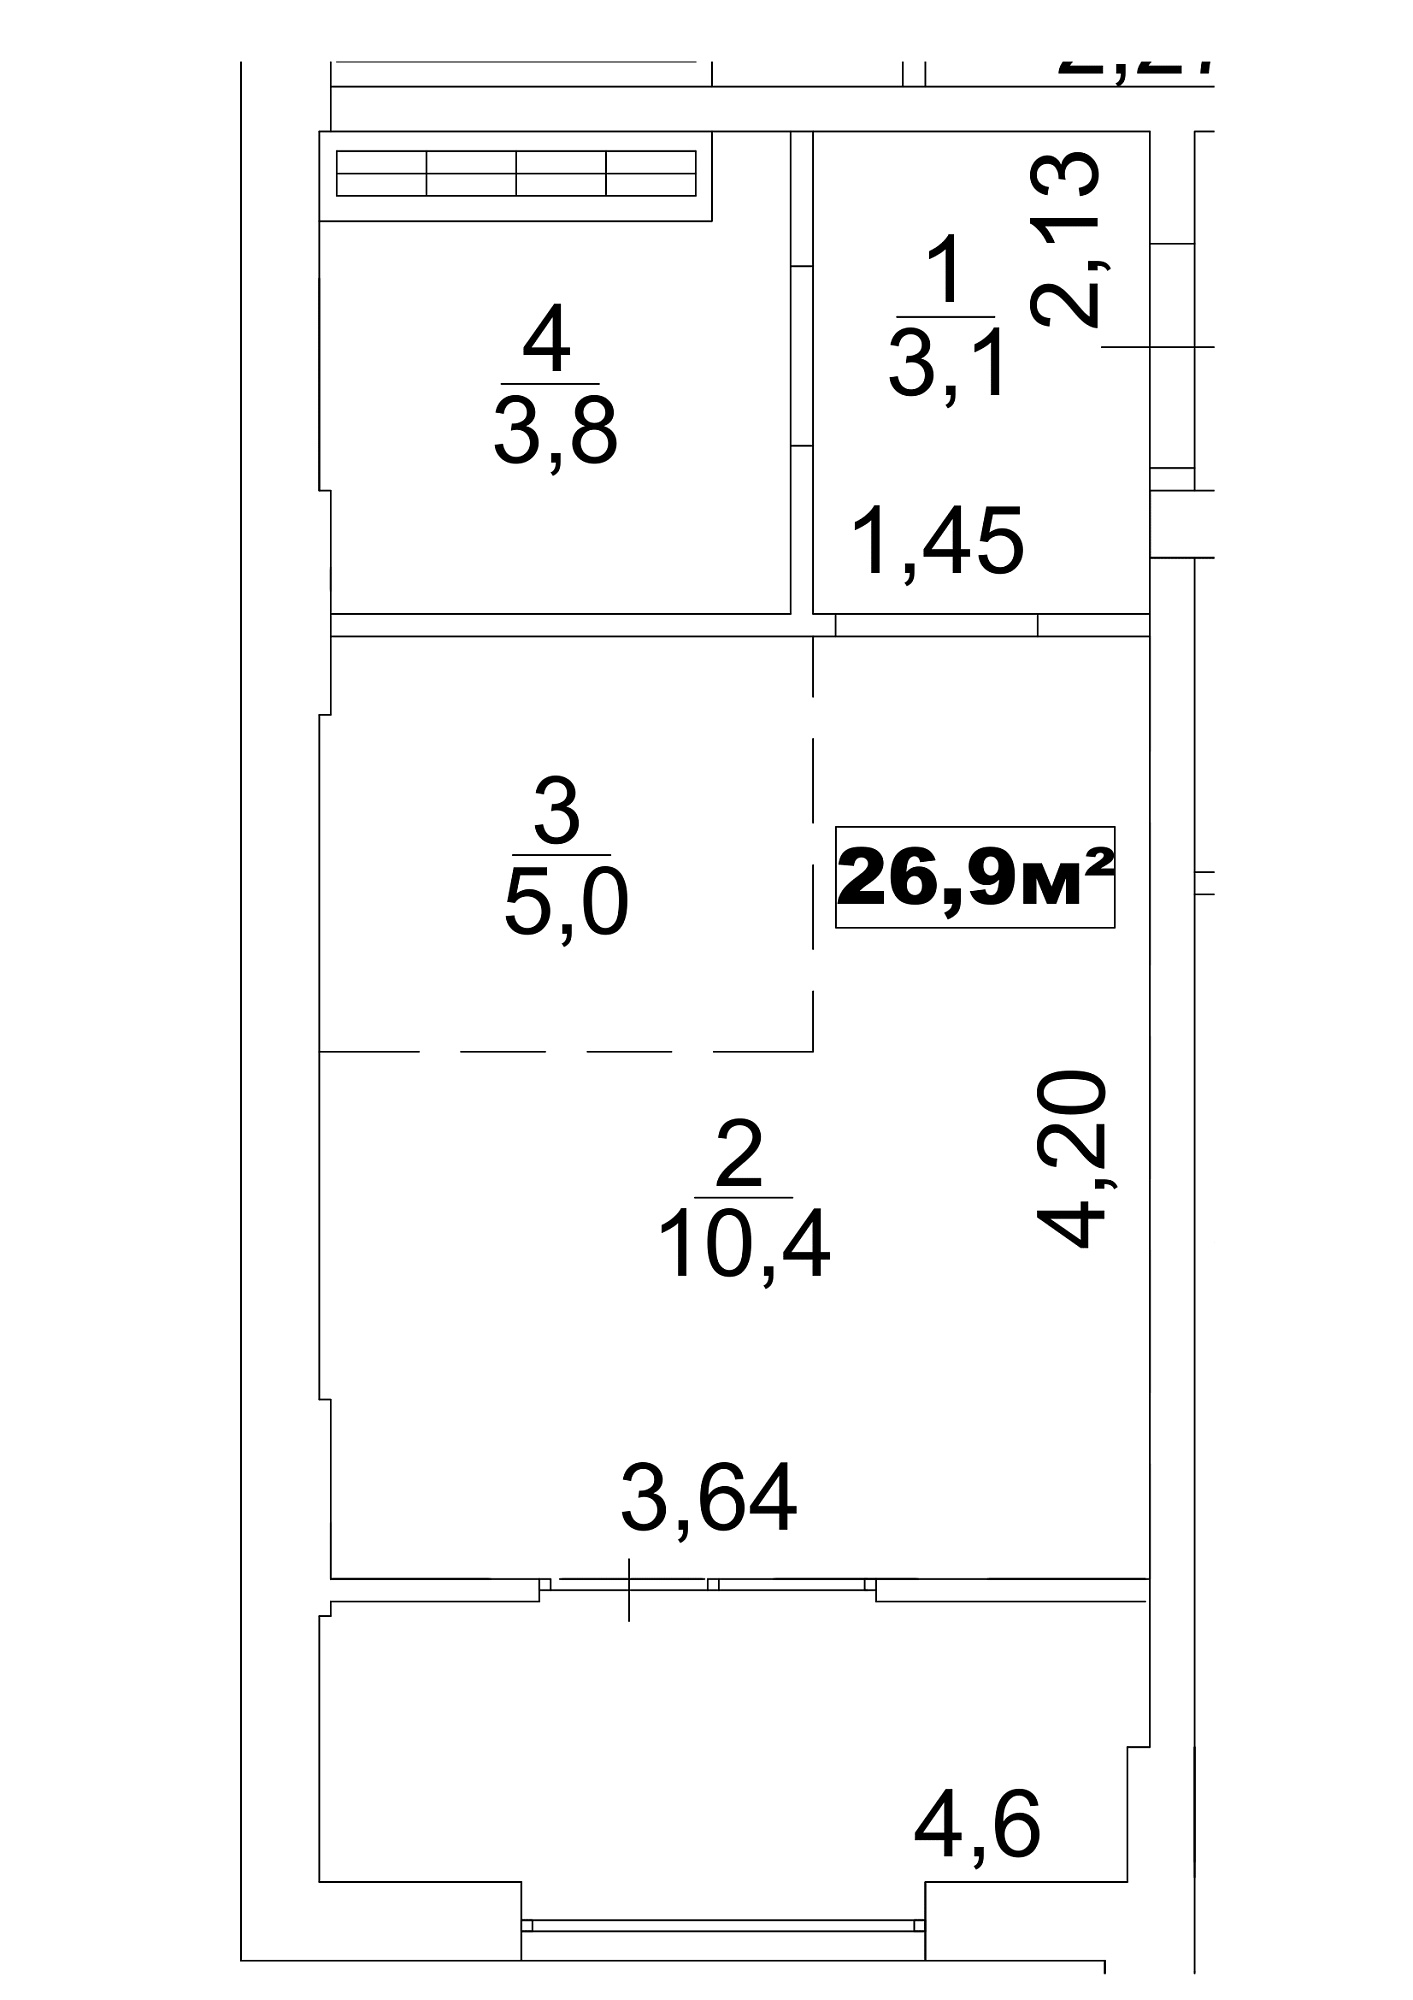 Planning Smart flats area 26.9m2, AB-13-04/0027а.